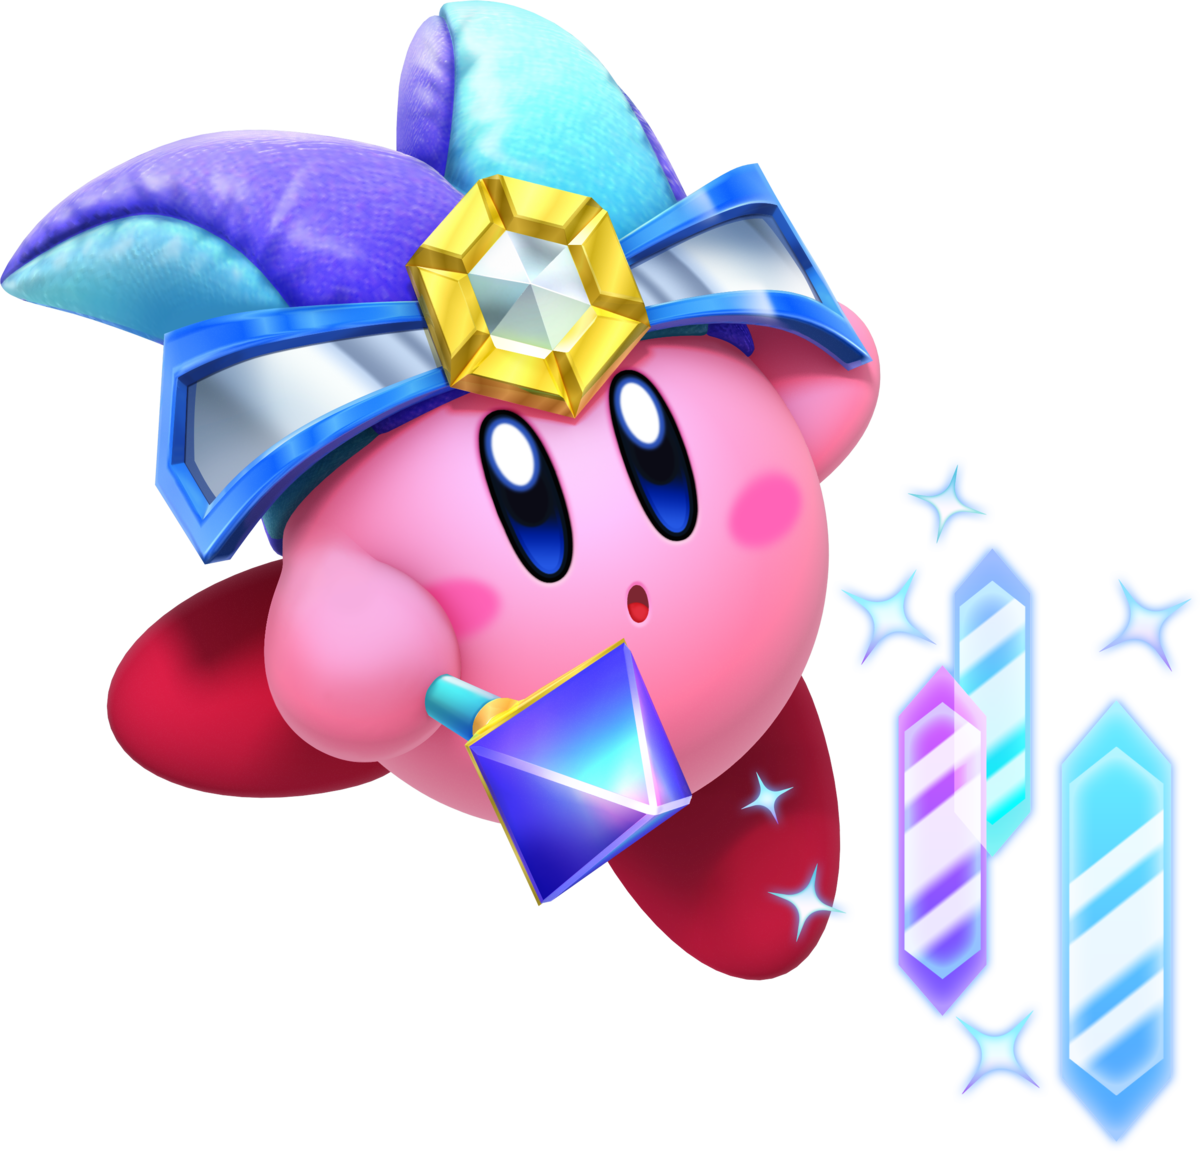 Mirror - WiKirby: it's a wiki, about Kirby!